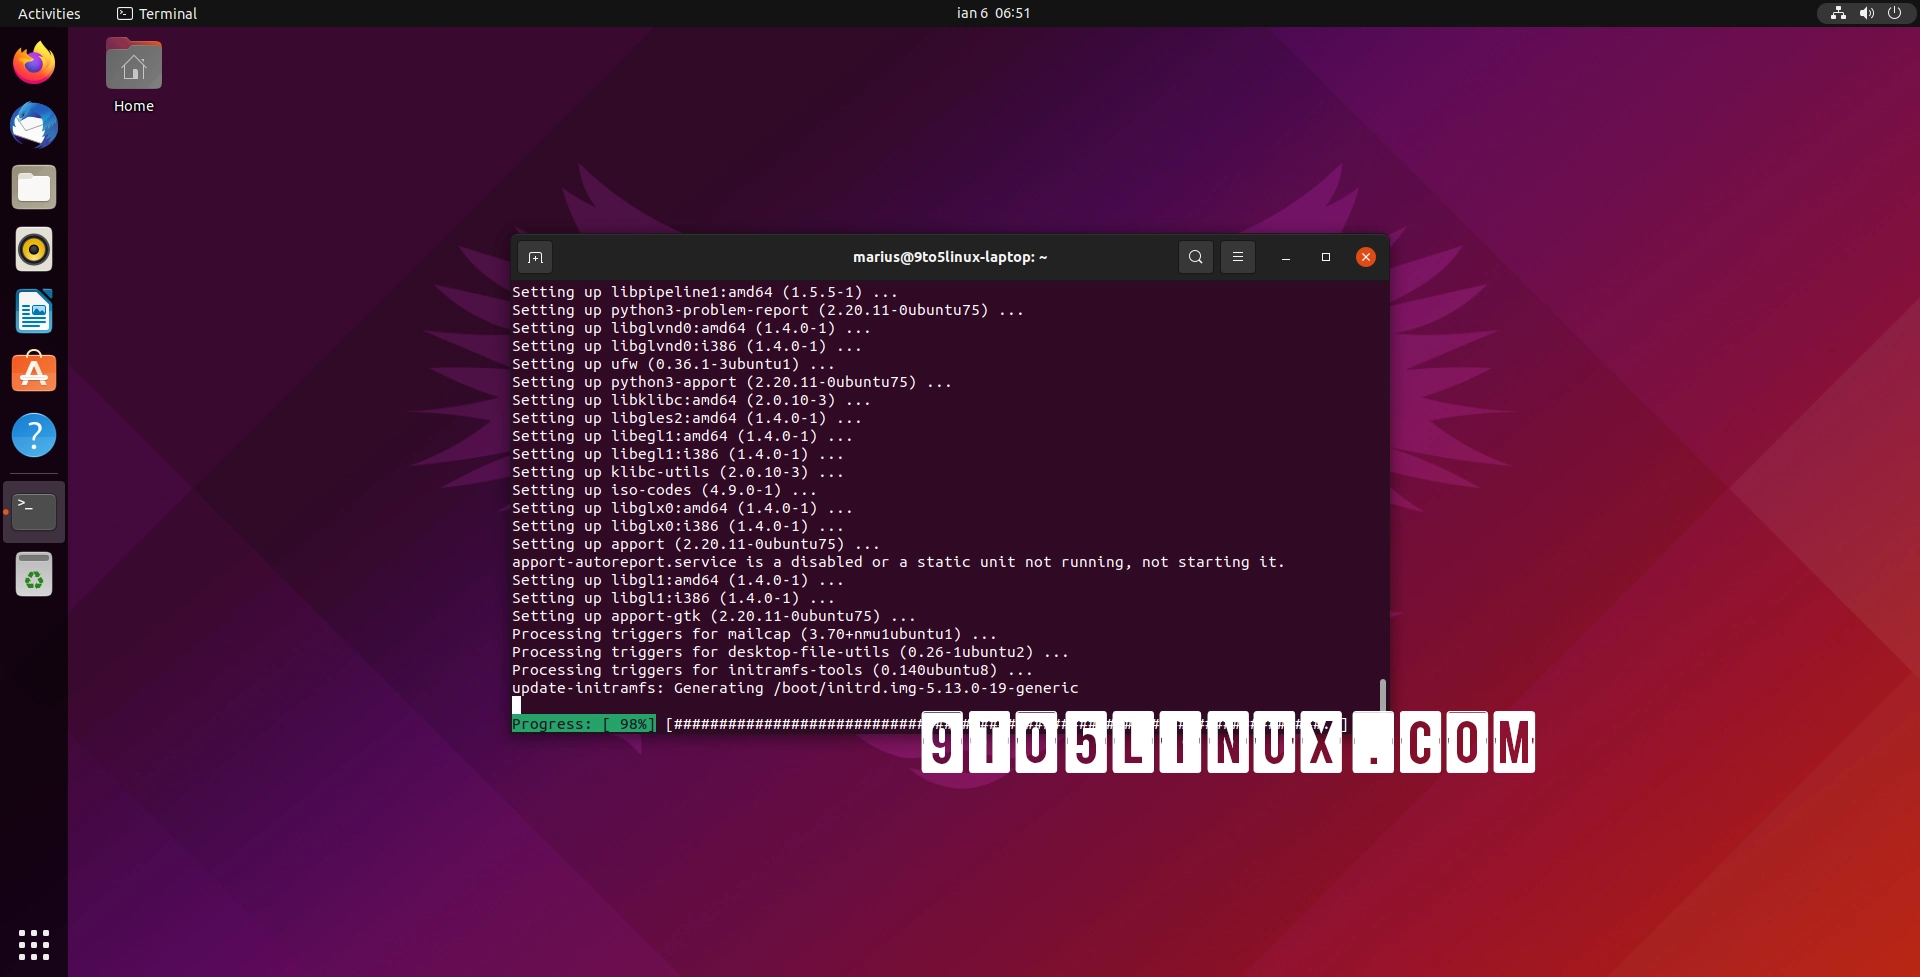 New Ubuntu Linux Kernel Security Updates Fix 9 Vulnerabilities, Patch Now